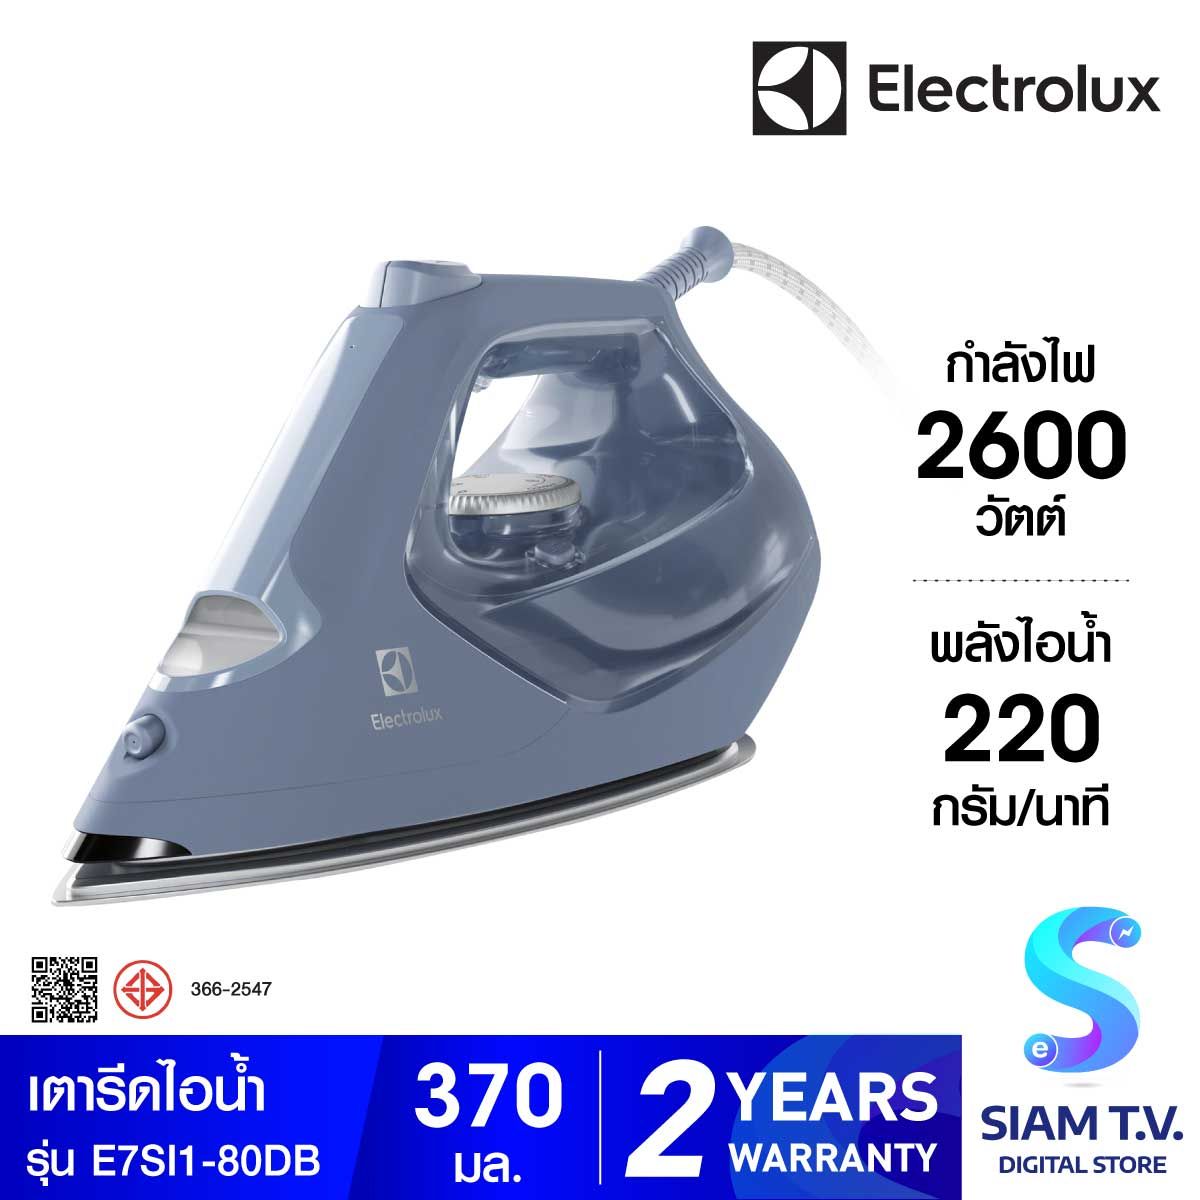 ELECTROLUX เตารีดไอน้ำ 2600 วัตต์ รุ่น E7Si1-80DB